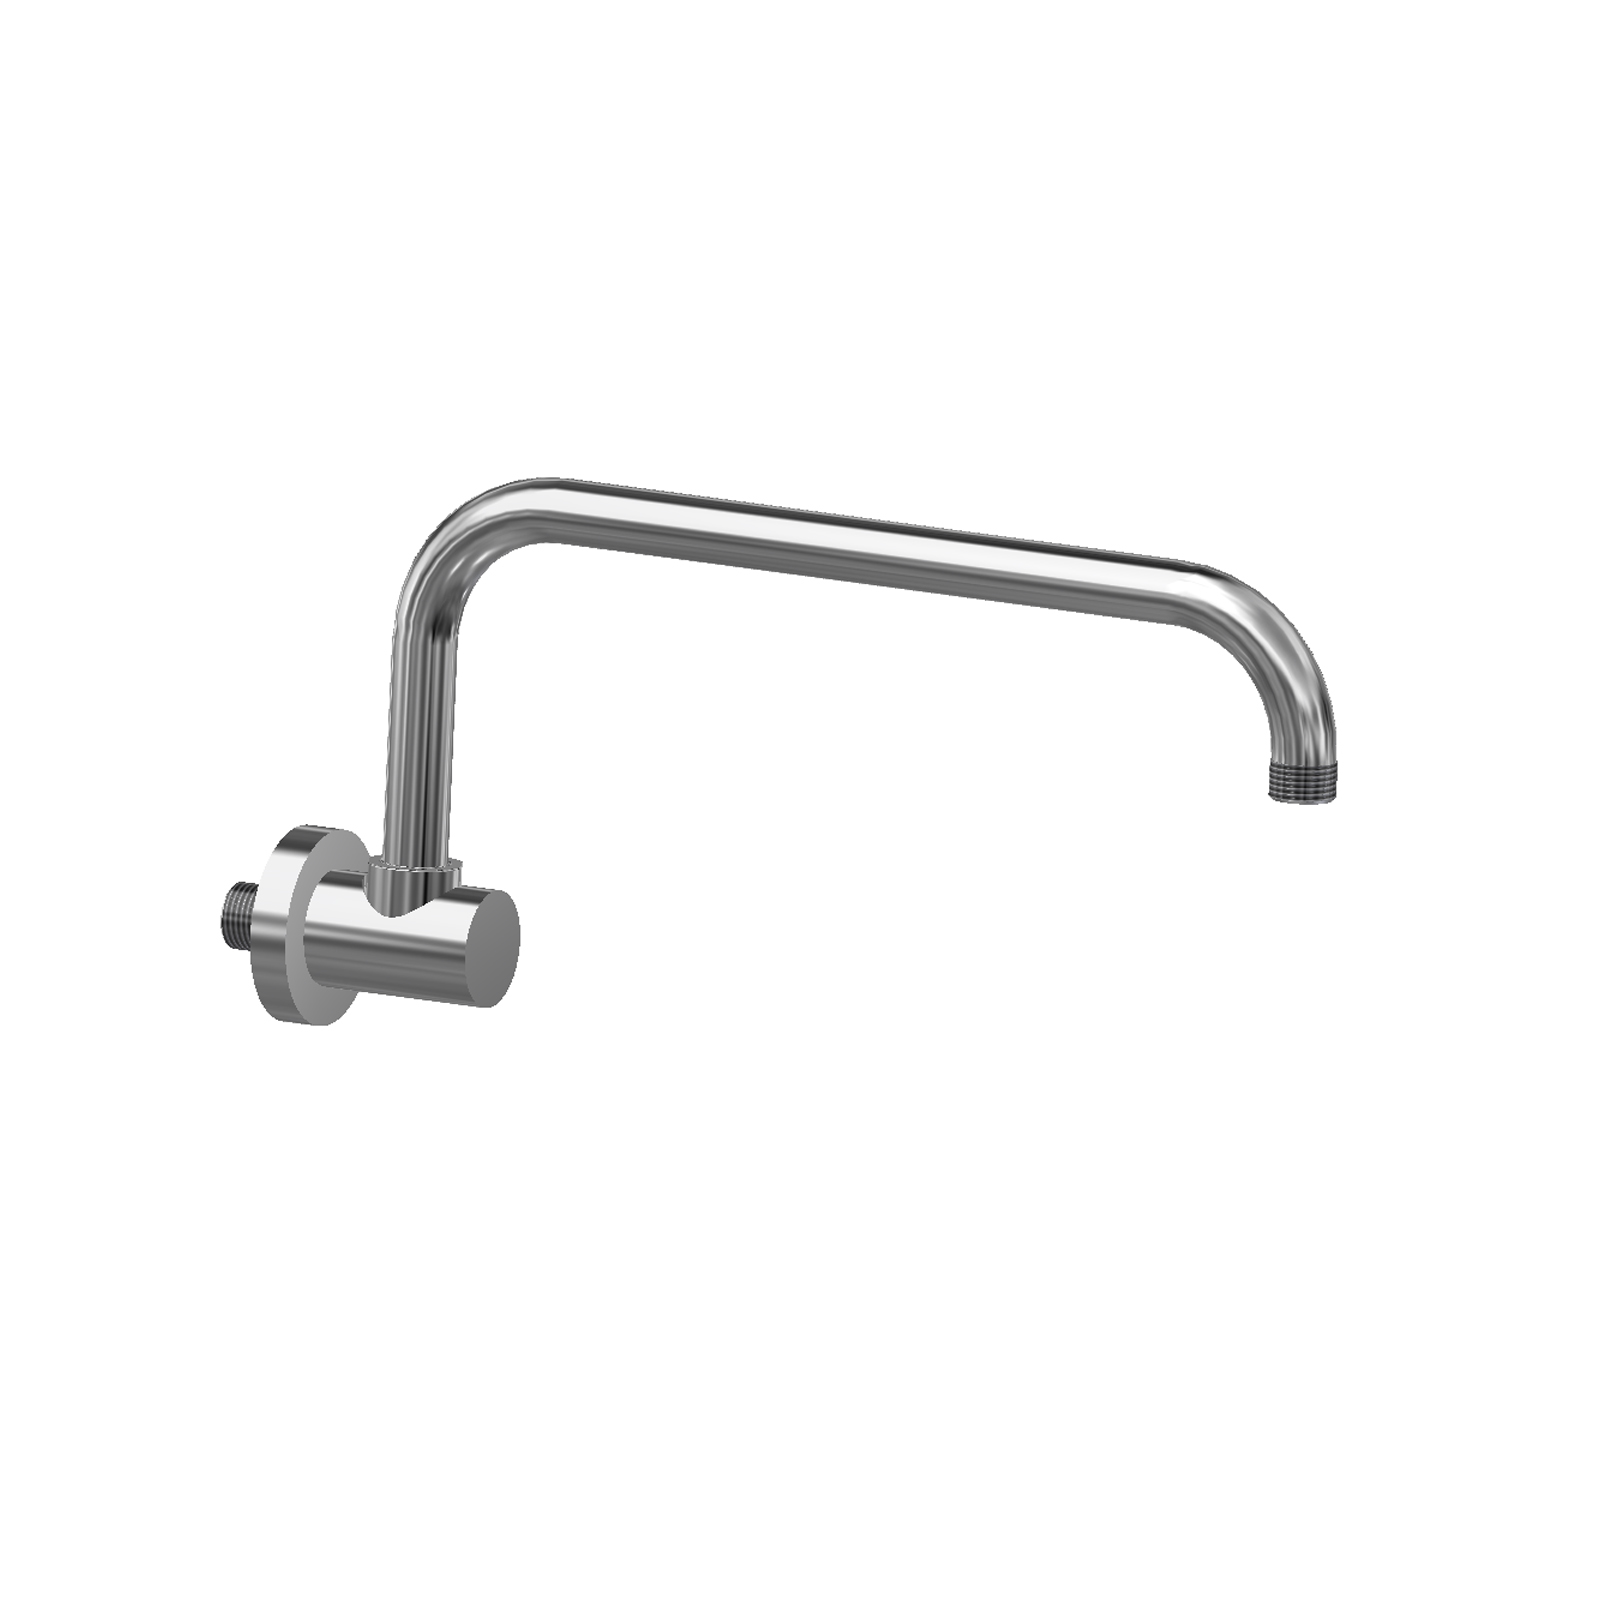 Brass adjustable shower arm